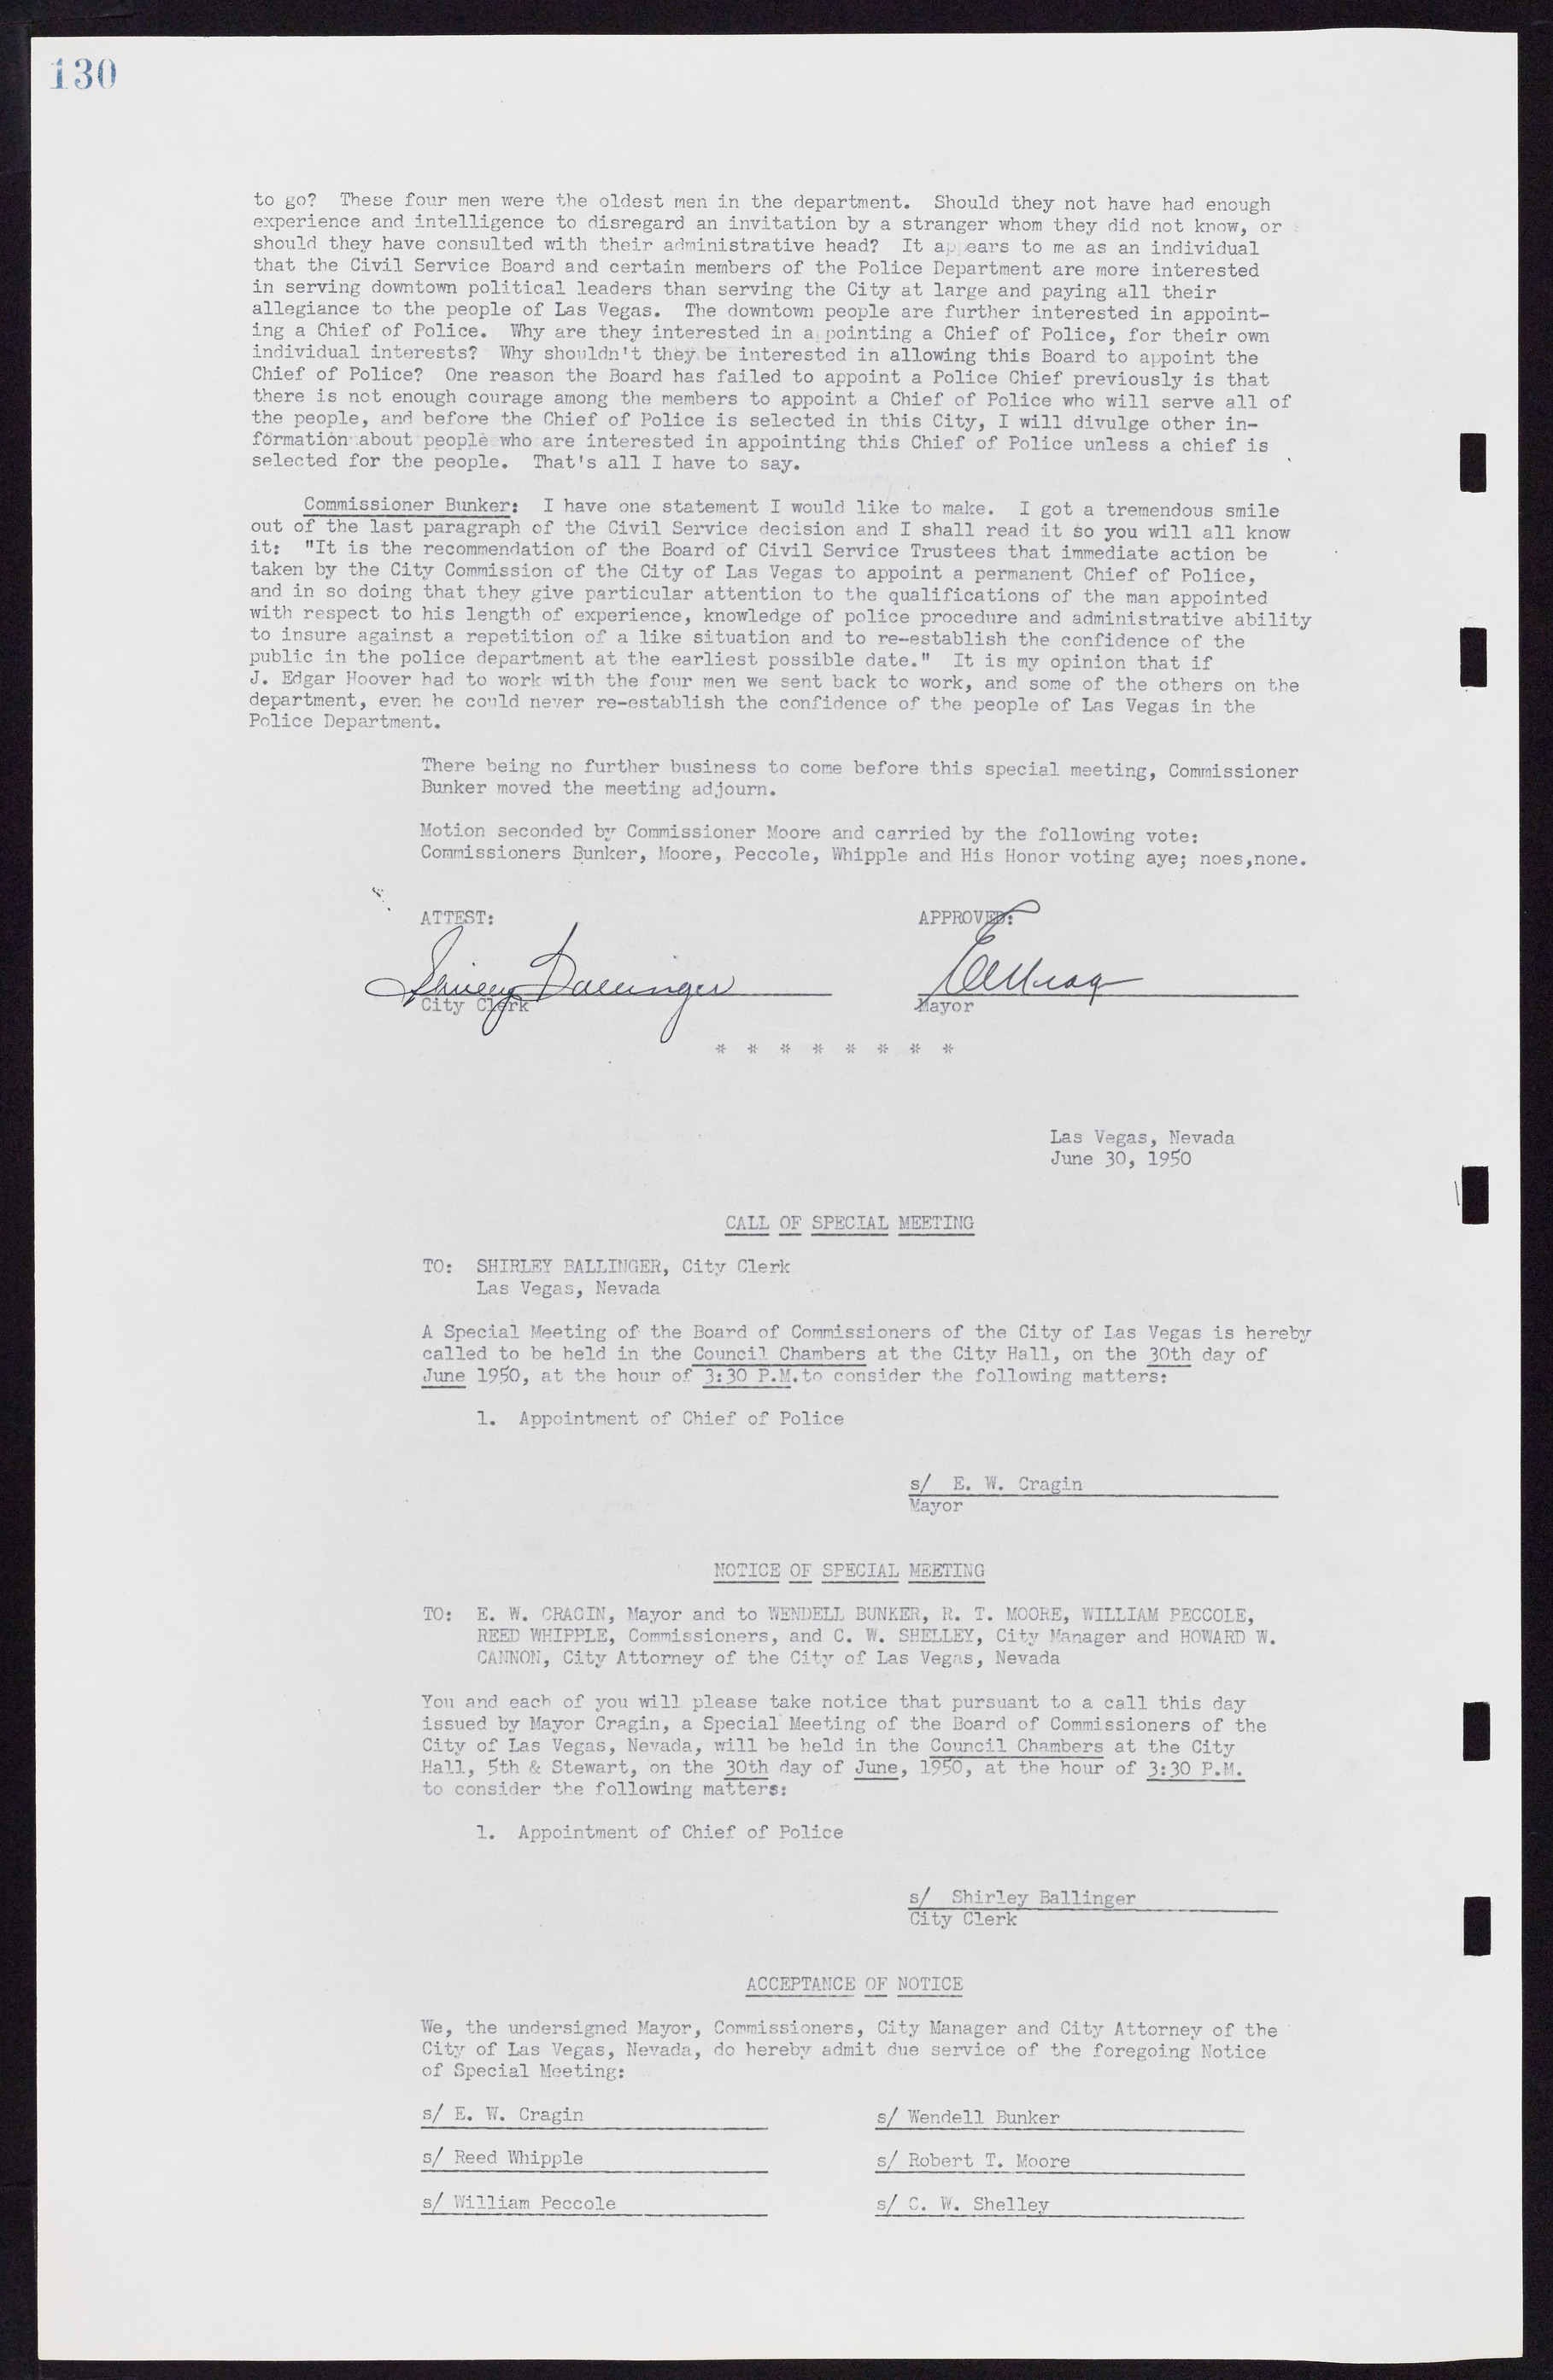 Las Vegas City Commission Minutes, November 7, 1949 to May 21, 1952, lvc000007-138